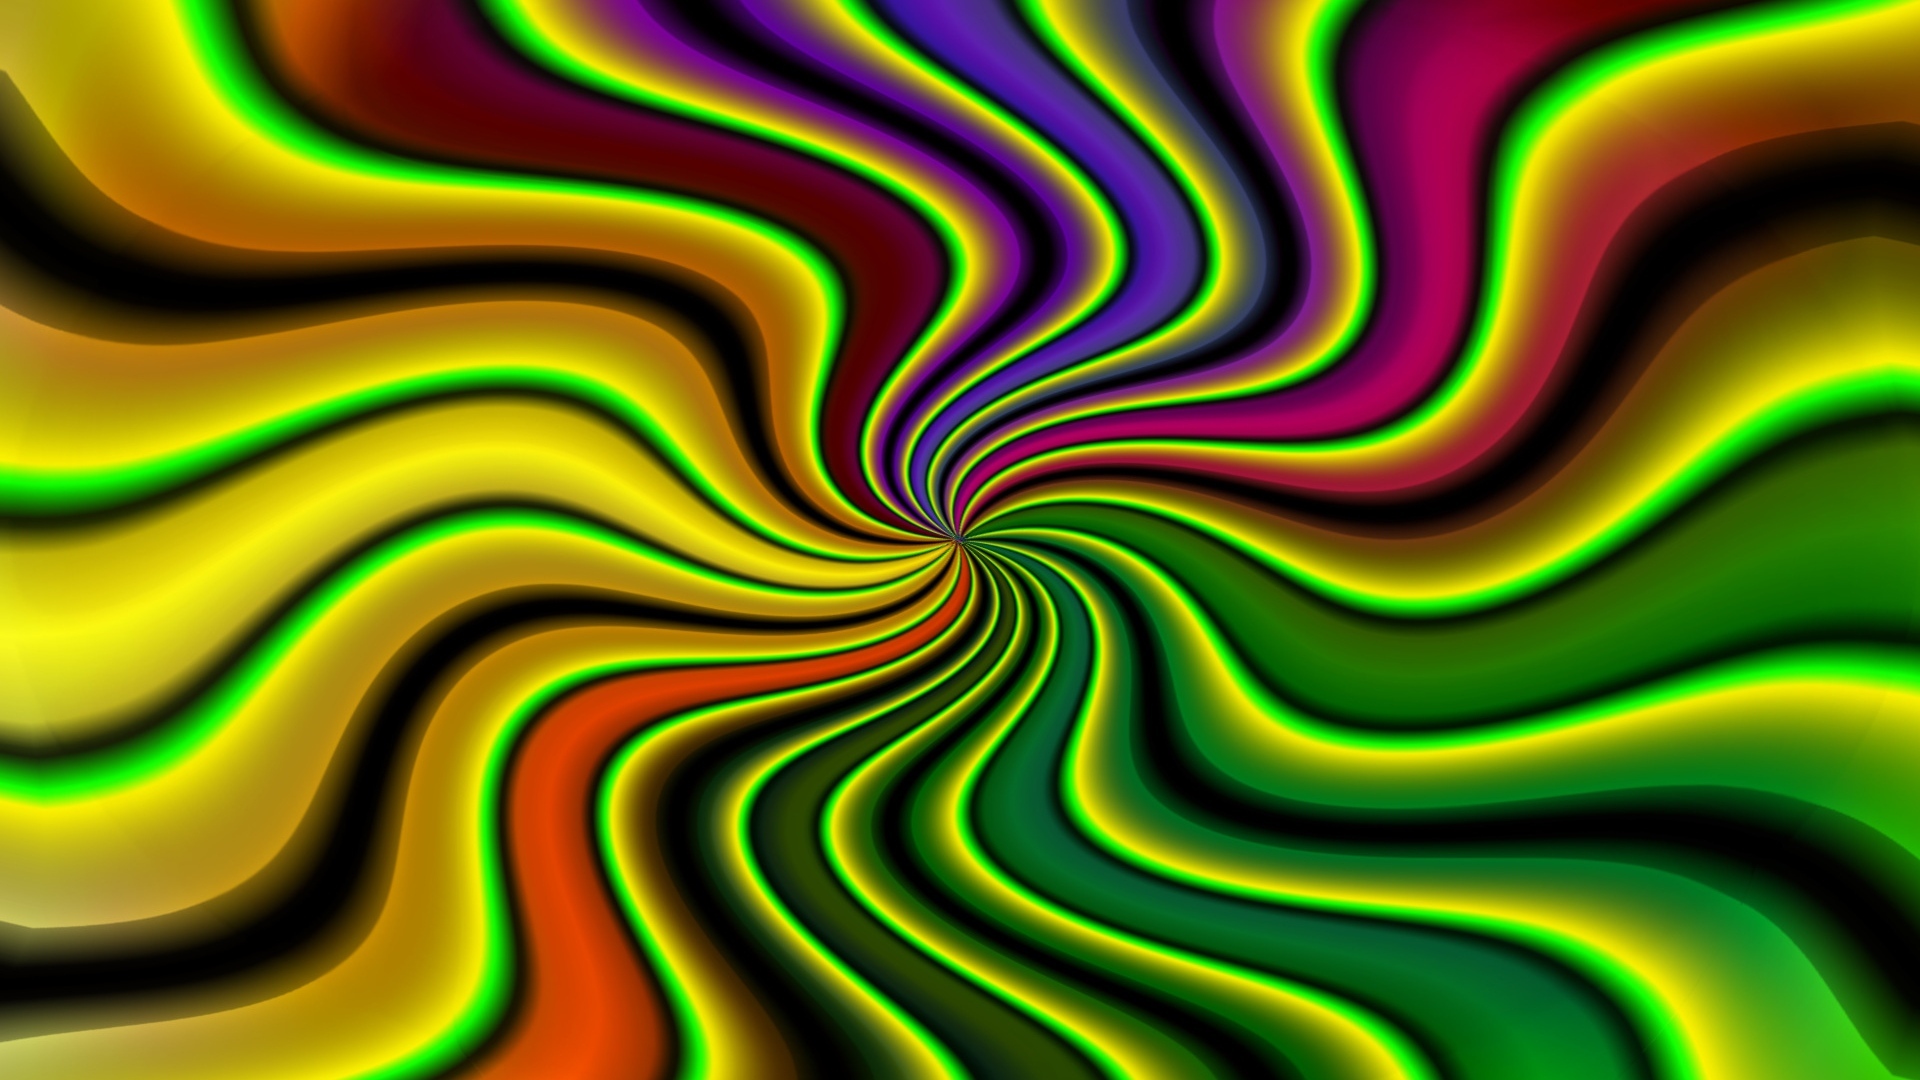 Colorful Optical Illusions